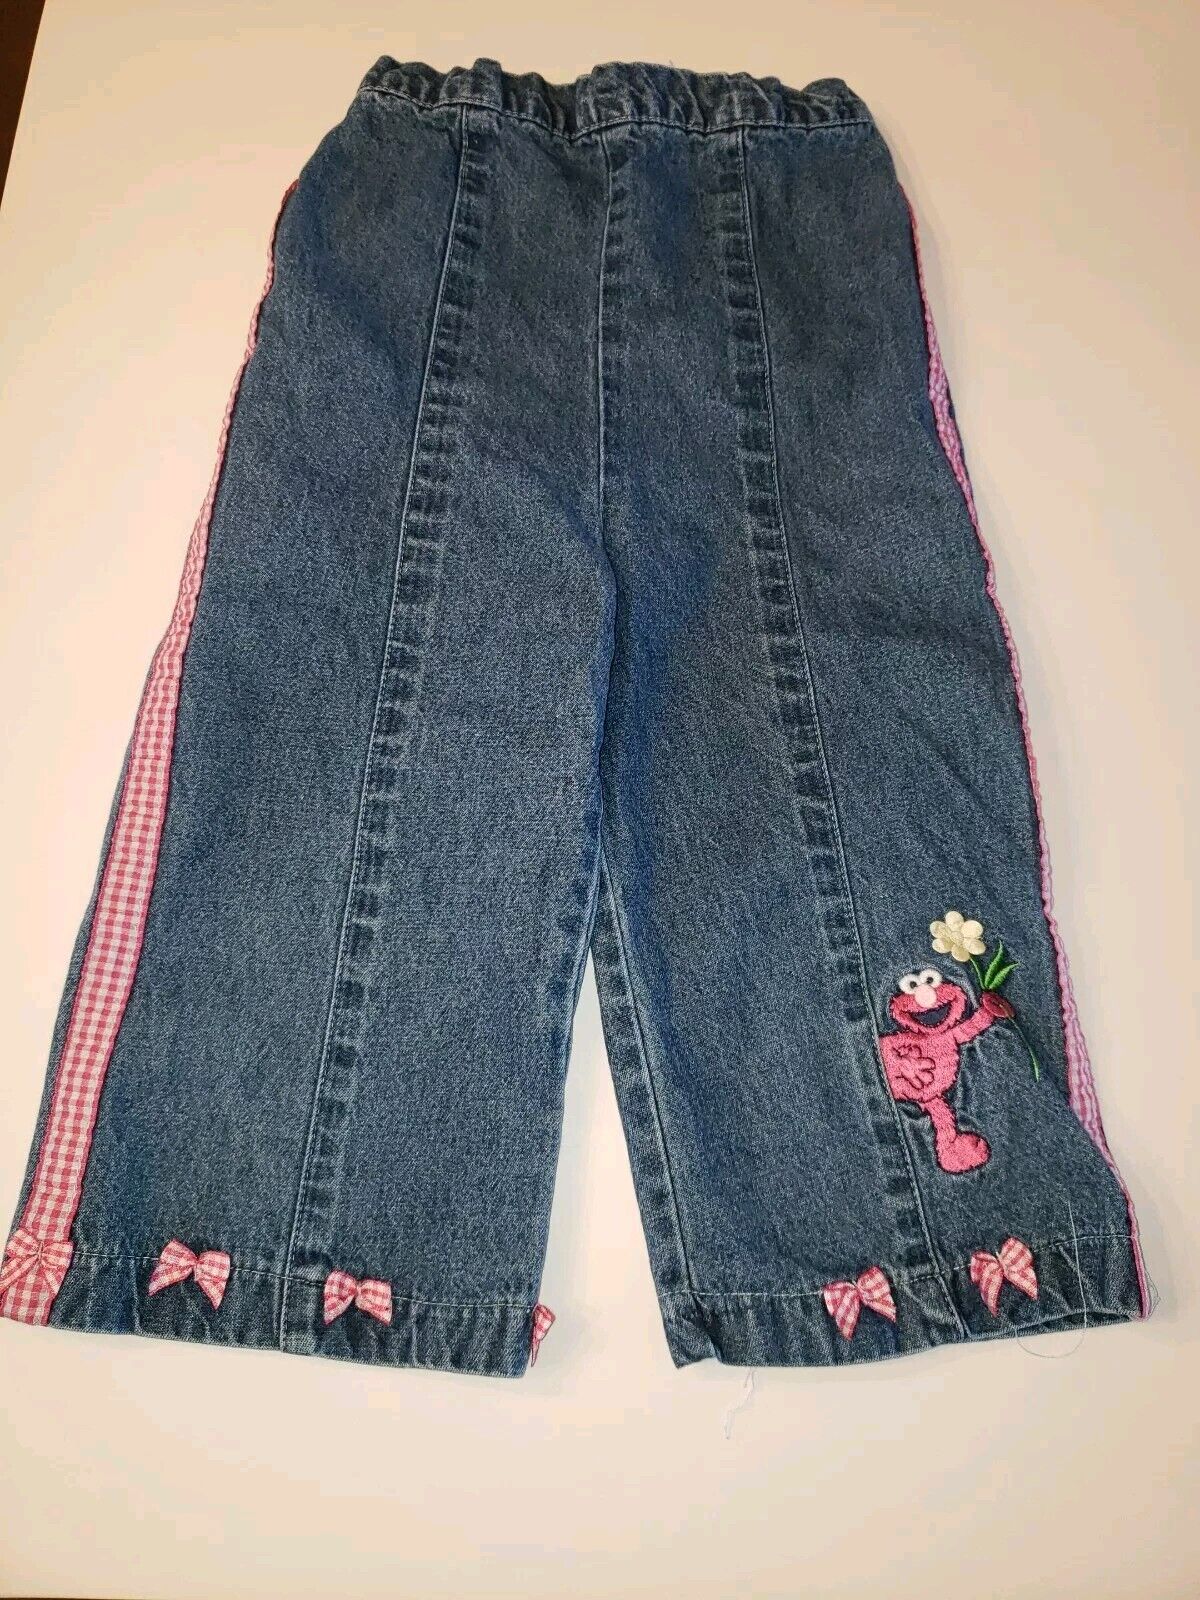 Elmo Jeans Girl’s Sesame Street Denim Pants Gingham Bows 5T, Vintage 90s